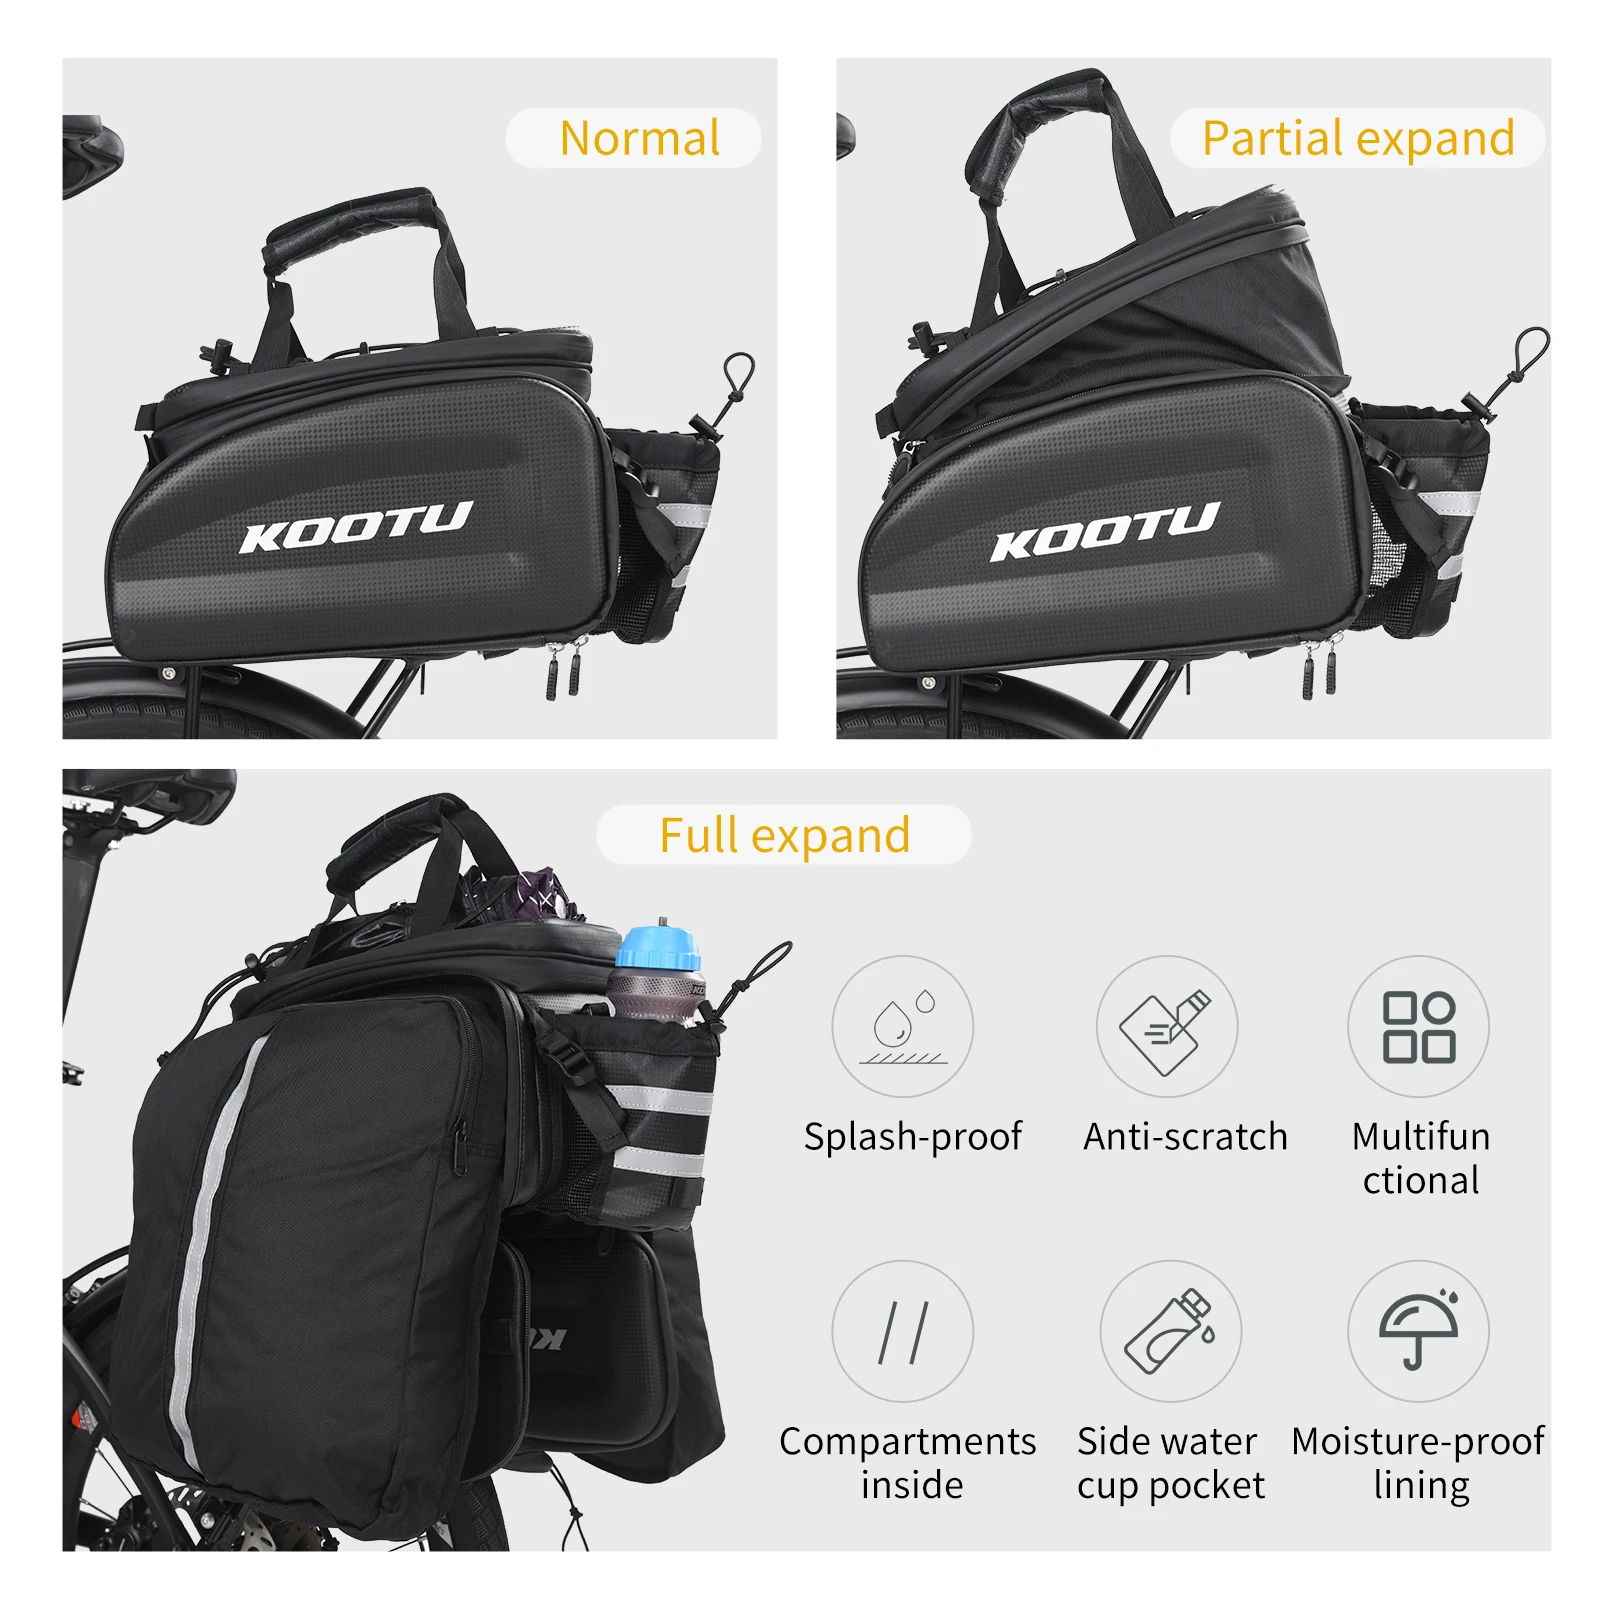 KOOTU bike bag large capacity 35L waterproof cycling bag bike trunk bag bike luggage bag multifunctional multi-pocket travel bag